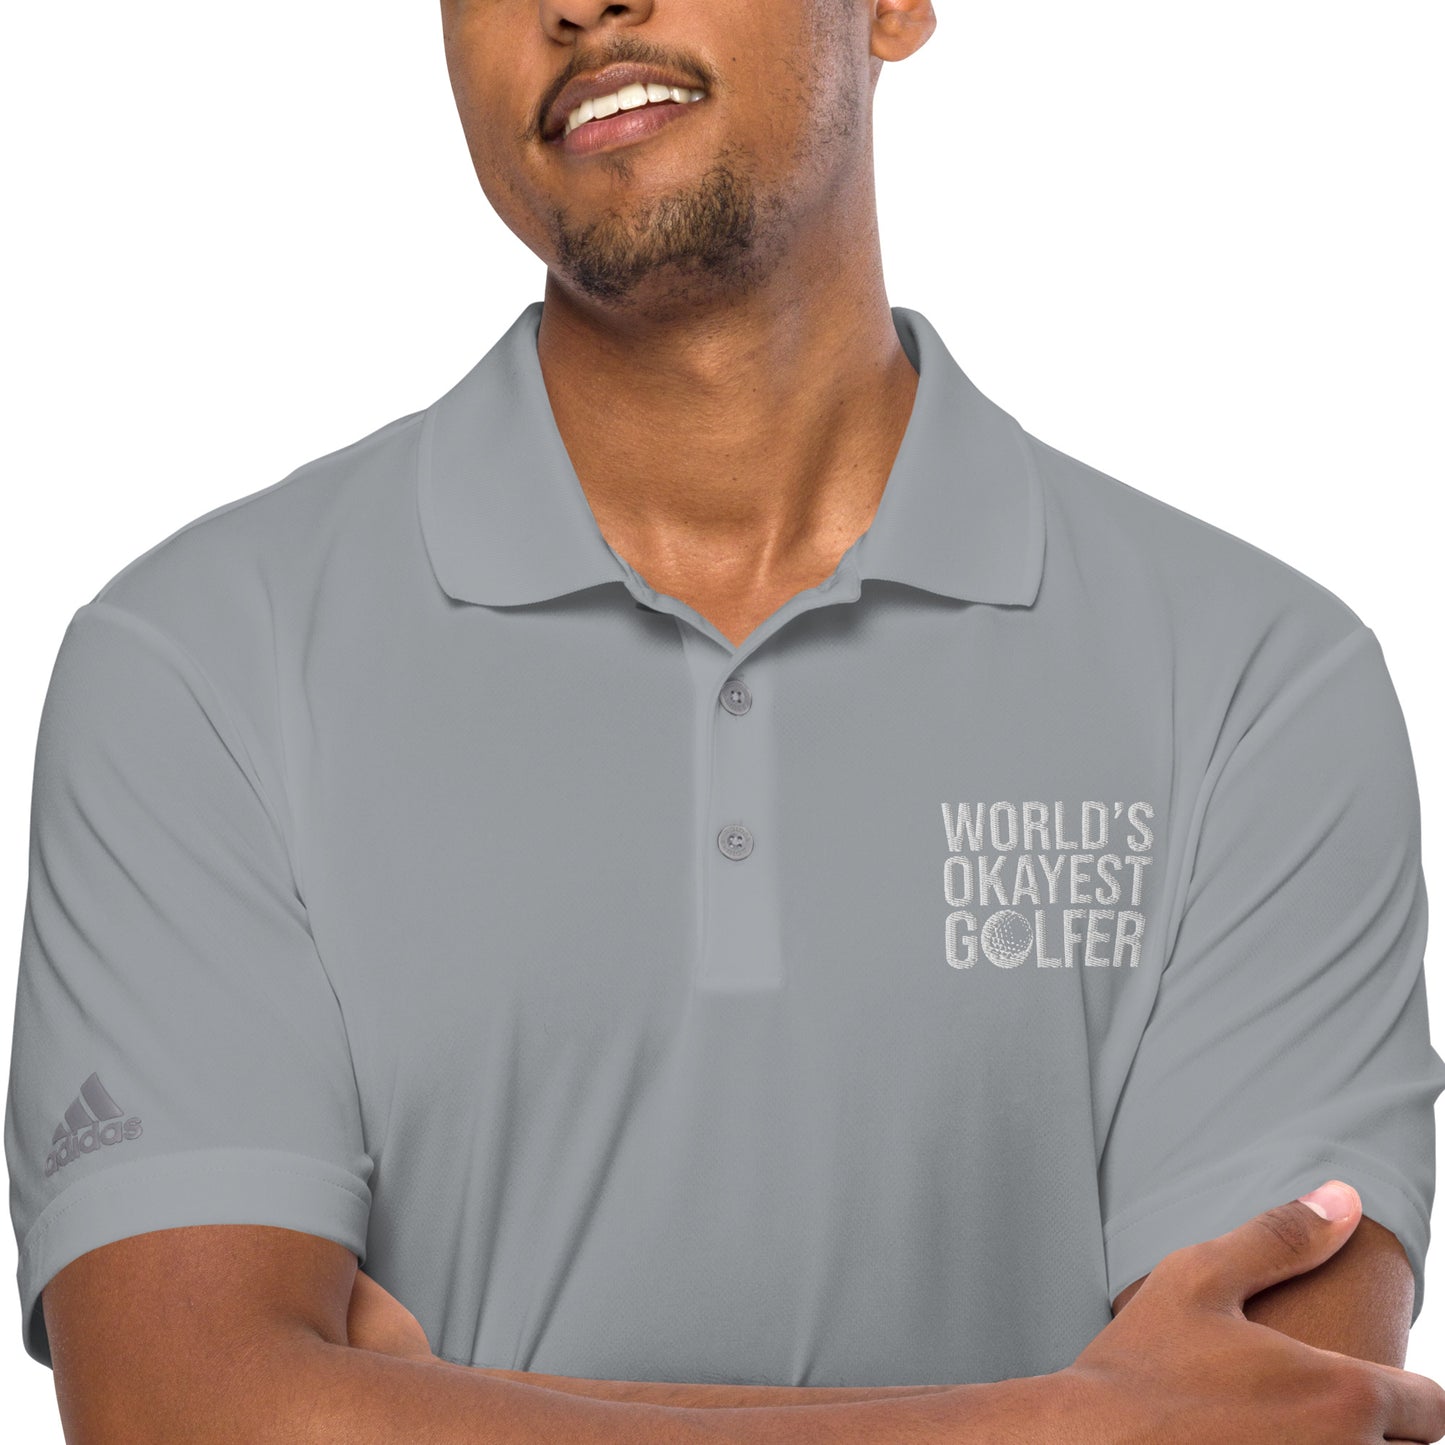 Adidas 'World's Okayest Golfer' Performance Polo Shirt